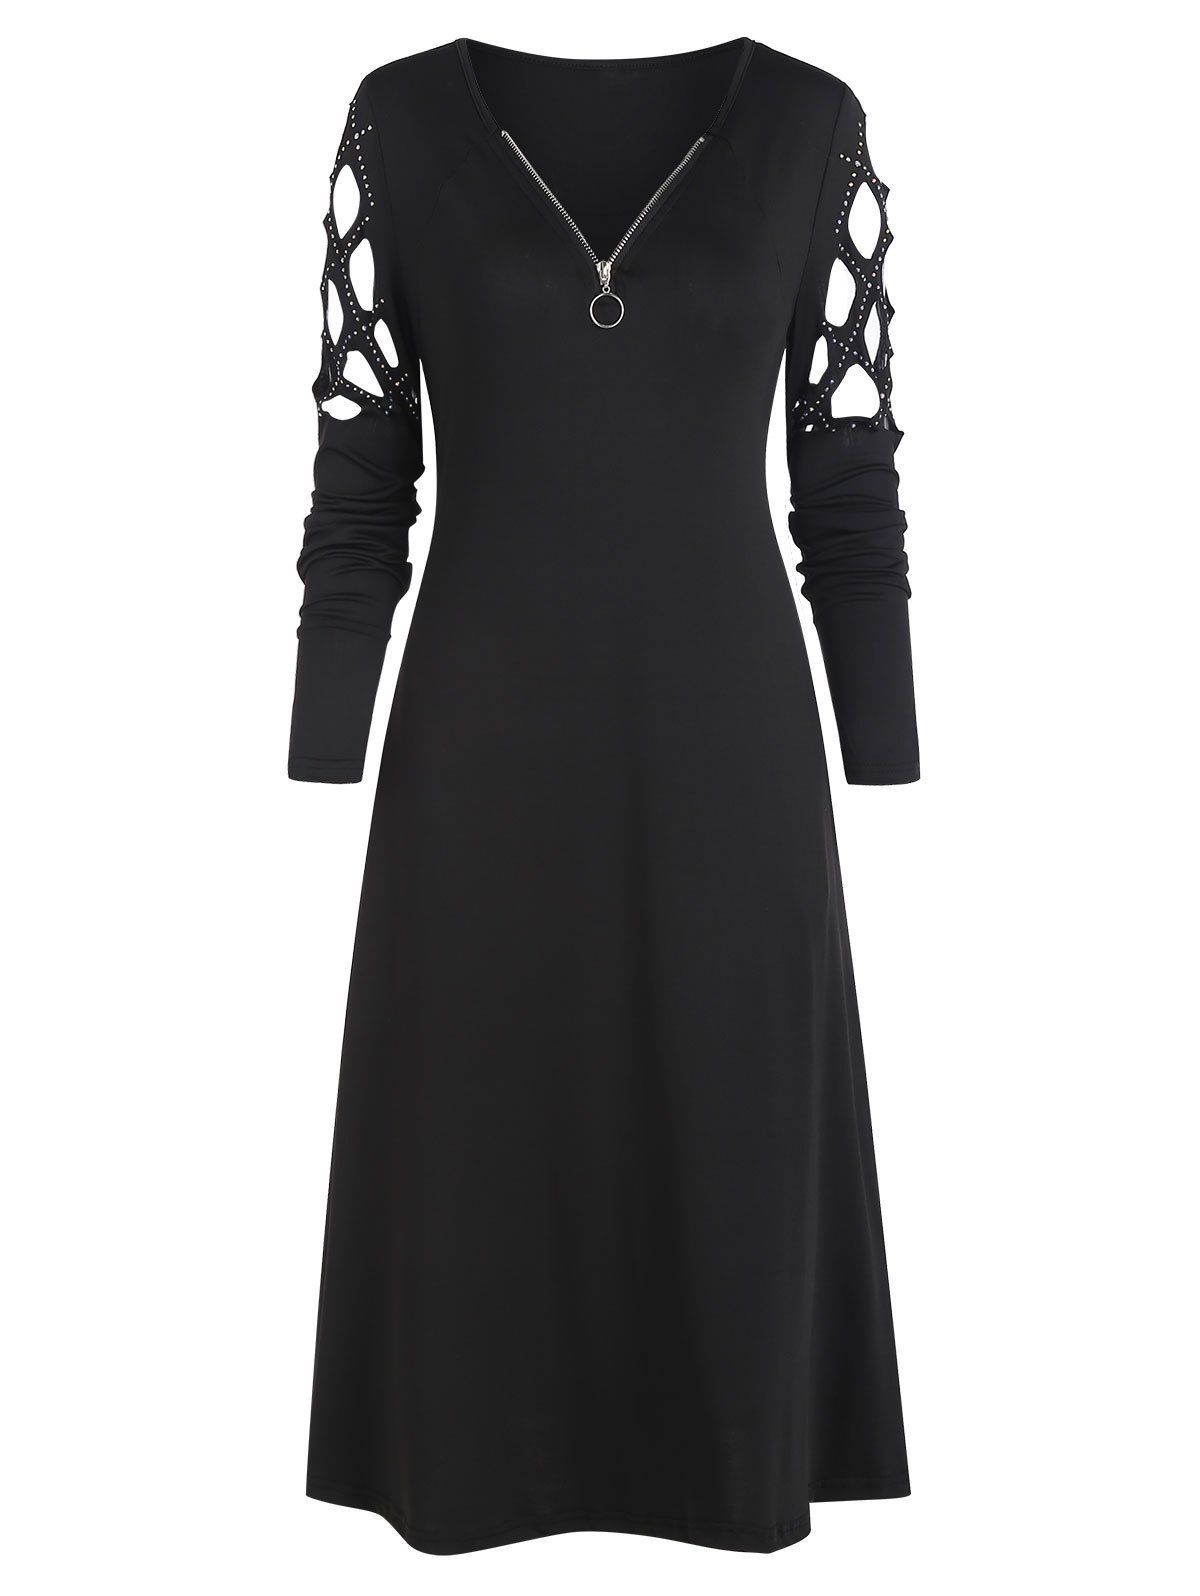 Robe Anneau en O Zippée avec Strass - Noir XL